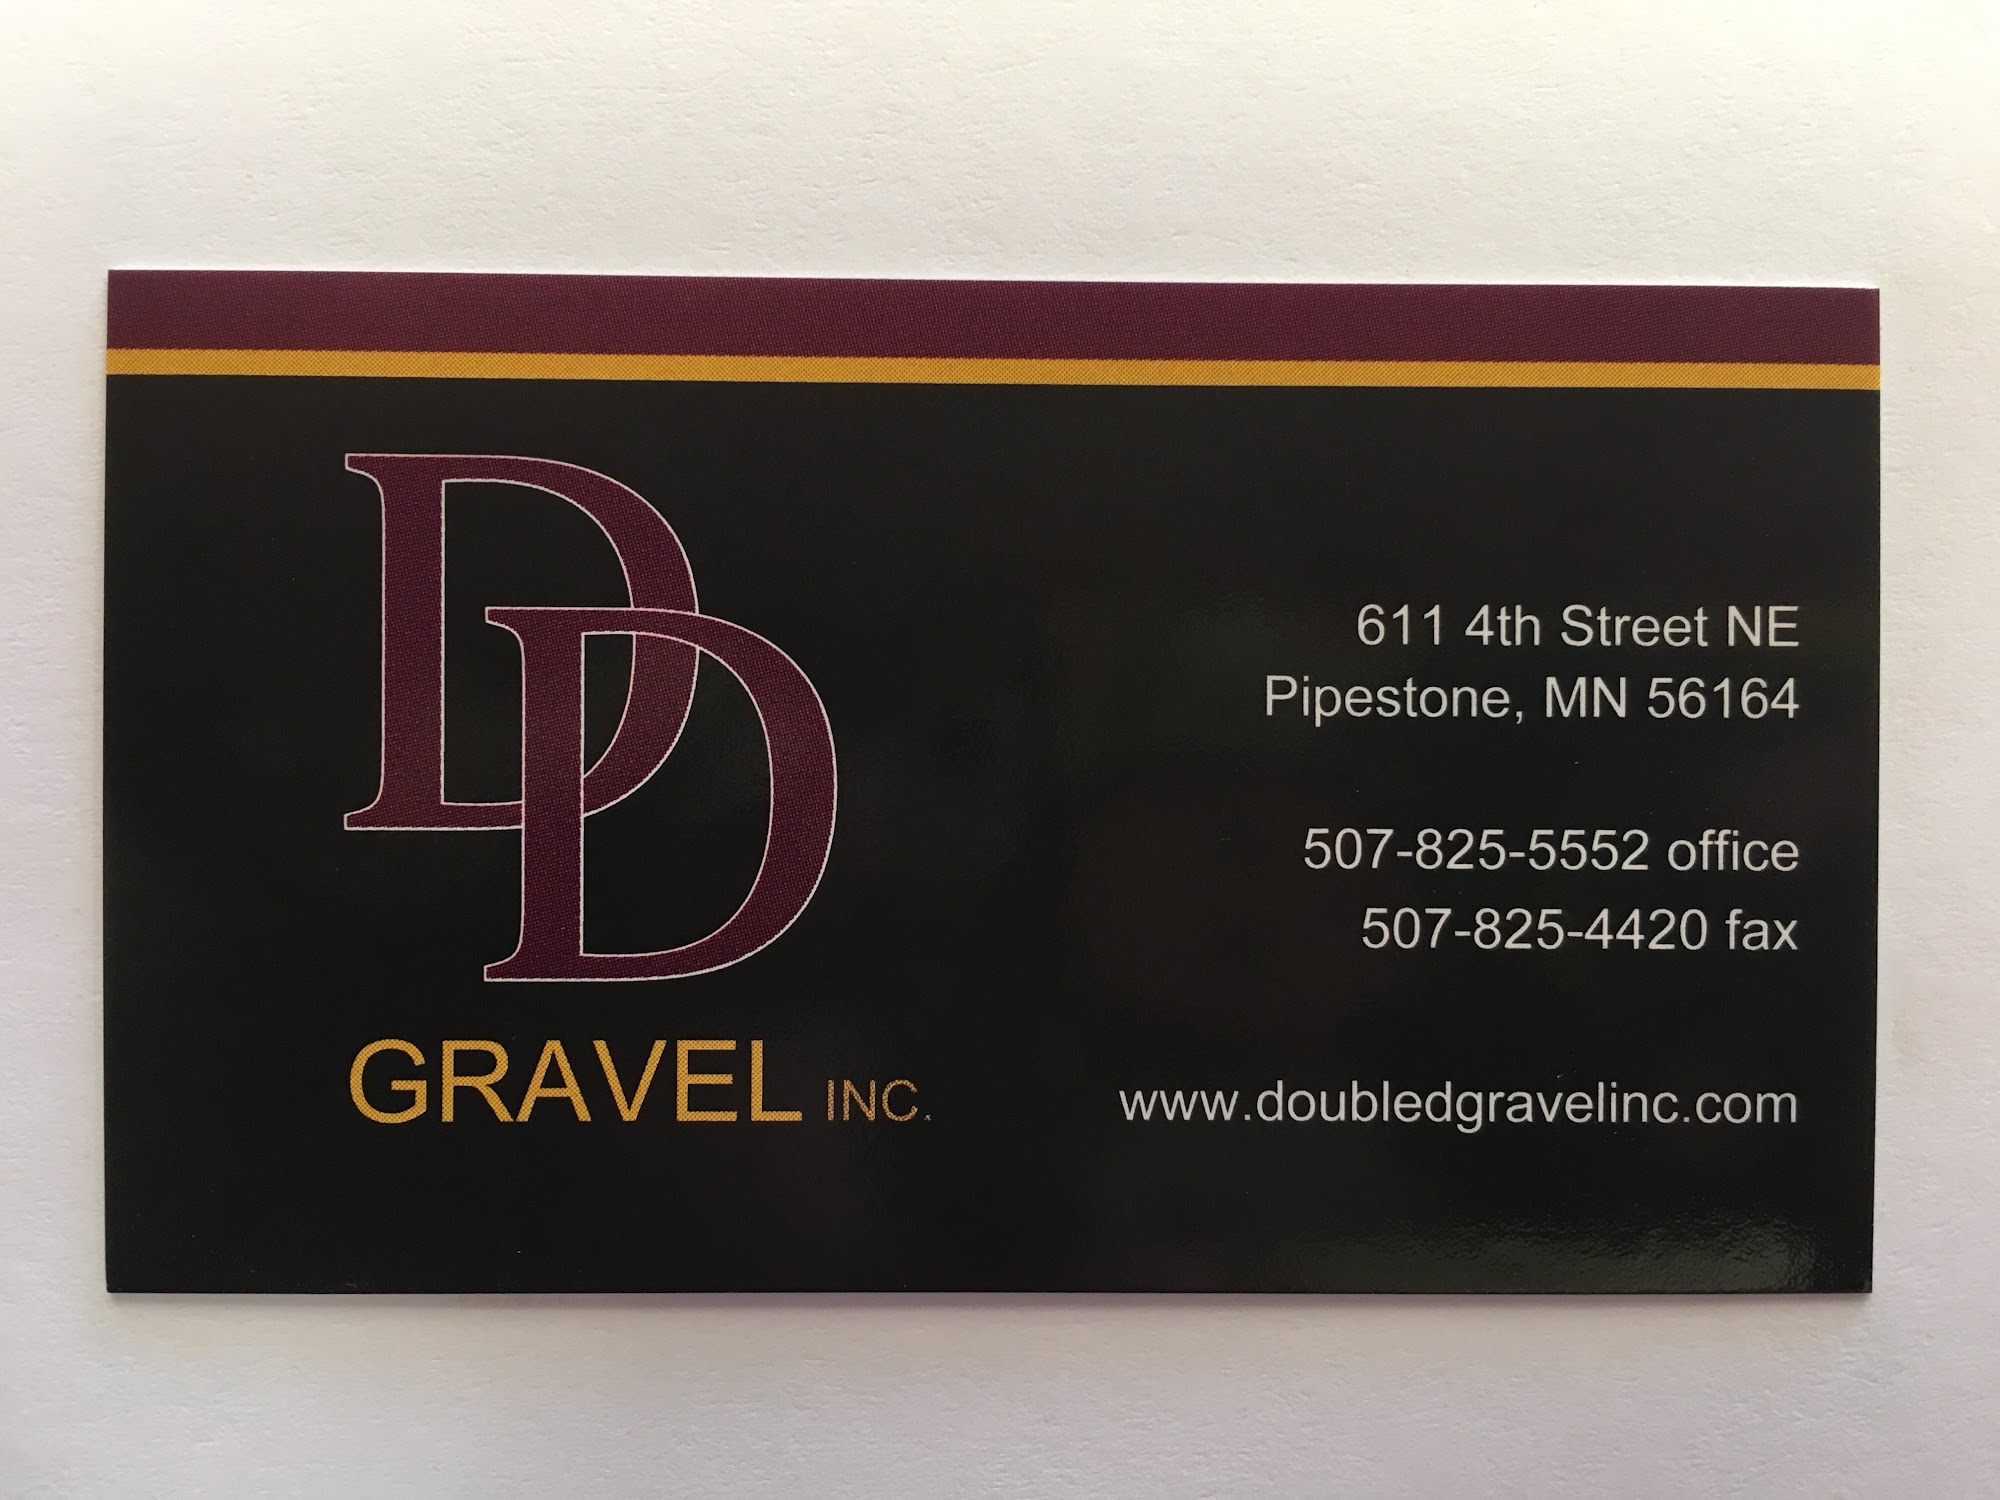 Double D Gravel Inc 611 4th St NE, Pipestone Minnesota 56164